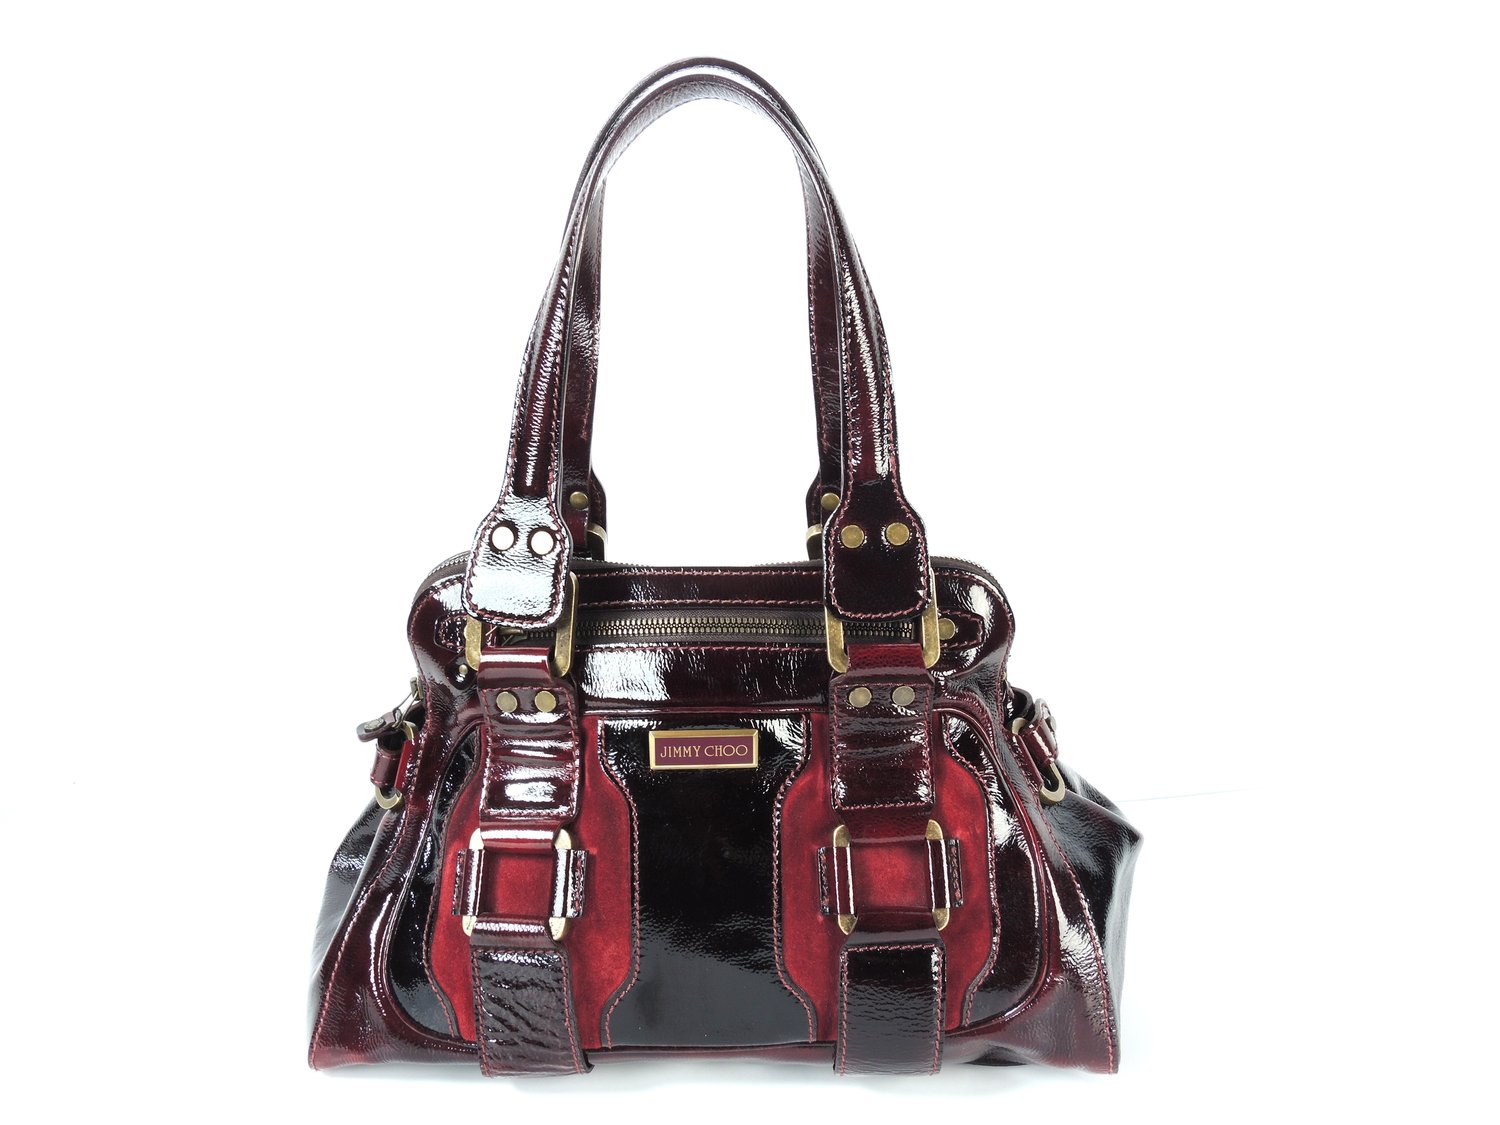 Burgundy Patent Leather Handbag